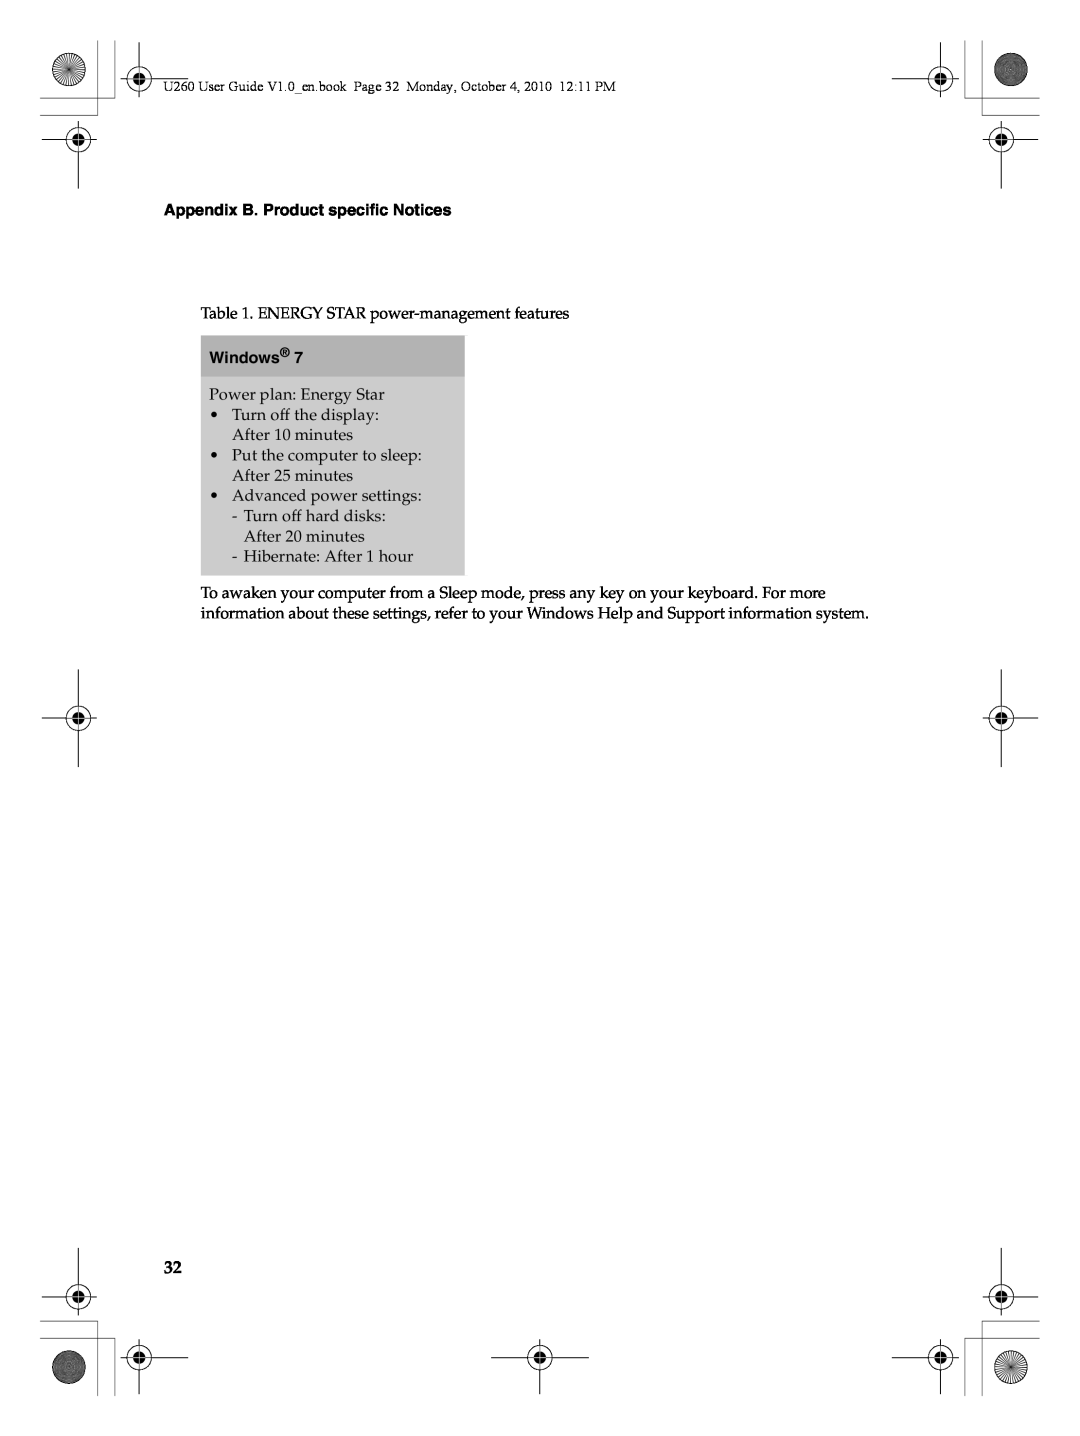 Lenovo U260 manual Appendix B. Product specific Notices, Windows 